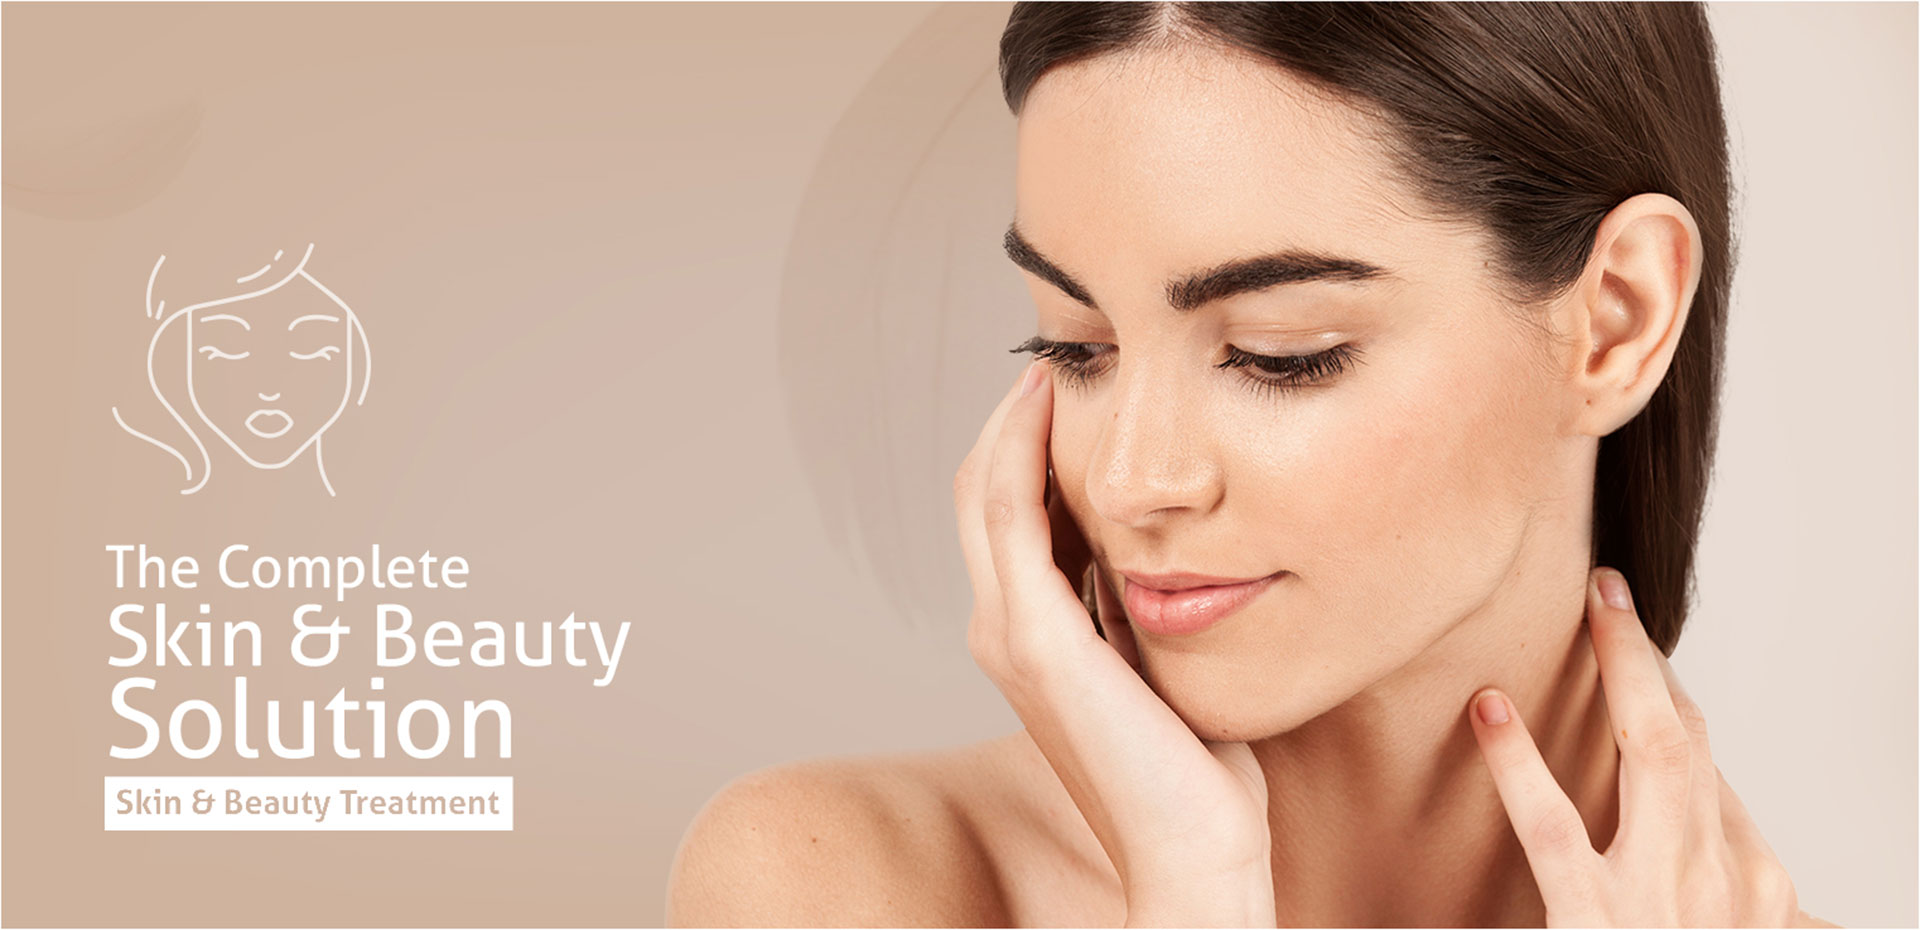 Skin & Beauty Treatment